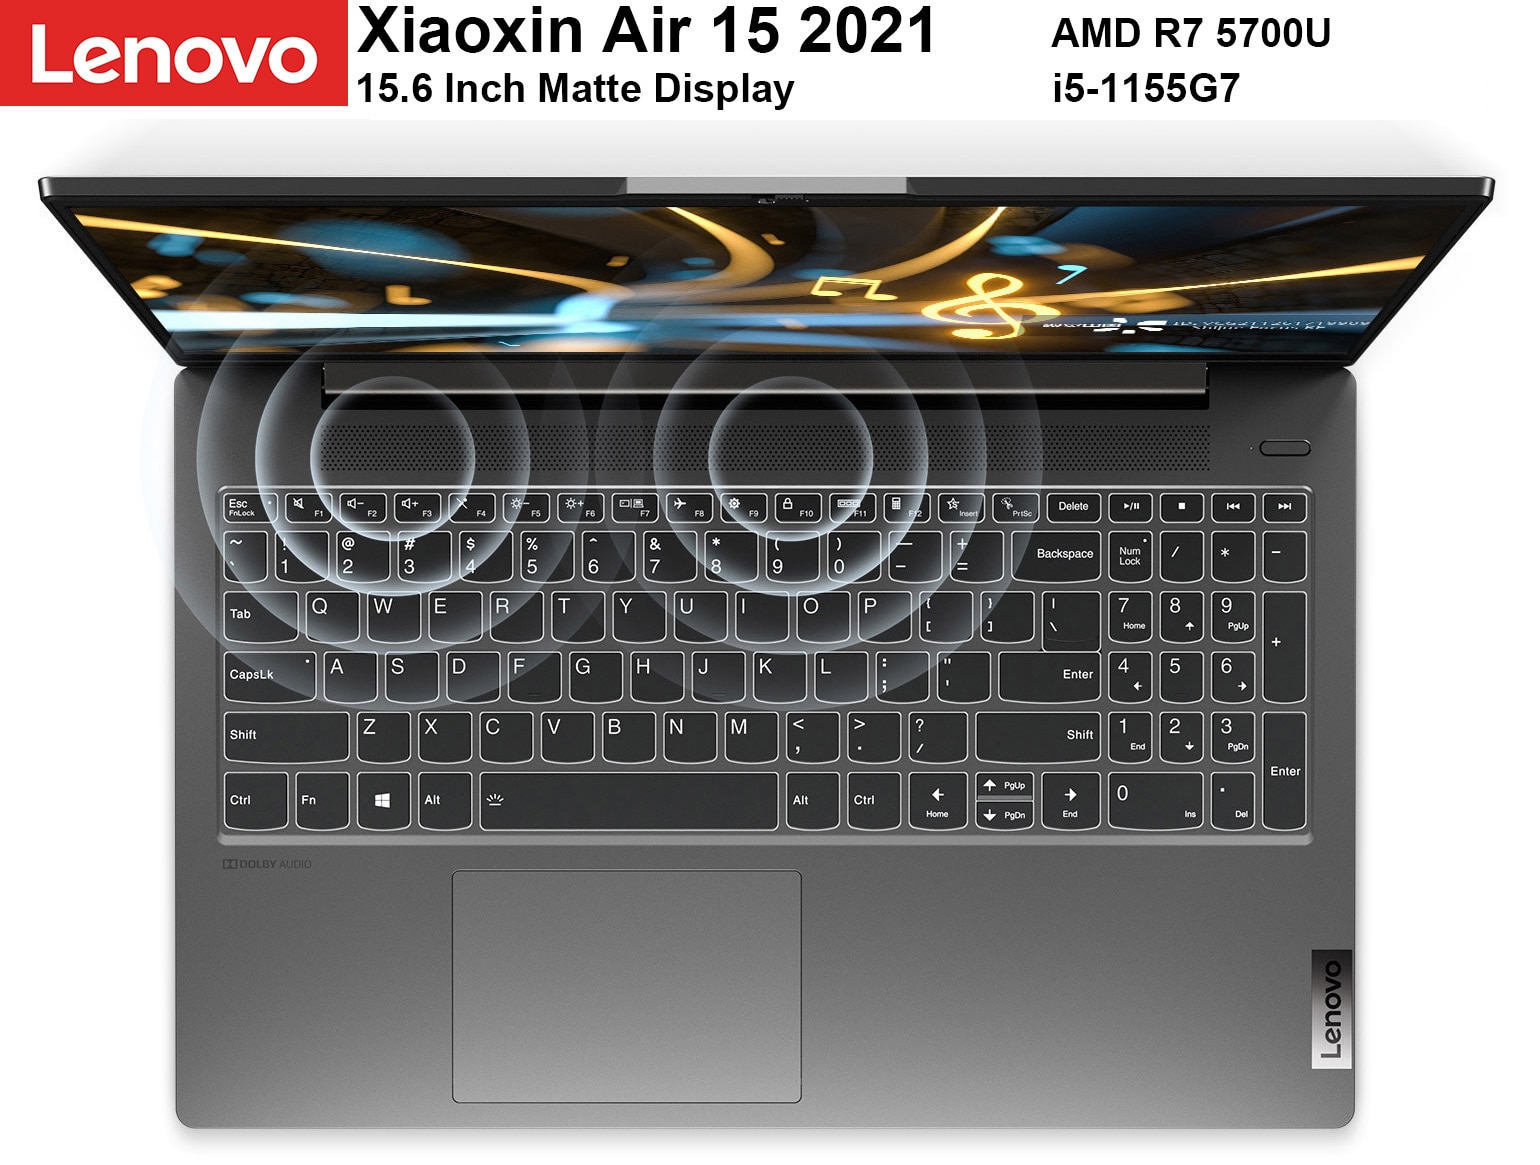 Lenovo Xiaoxin Air 15 2021 Laptop With 11th Gen Core i5 Processor AMD Ryzen 5700U 7nm CPU 16GB Ram 512GB SSD 15.6 Inch Matte